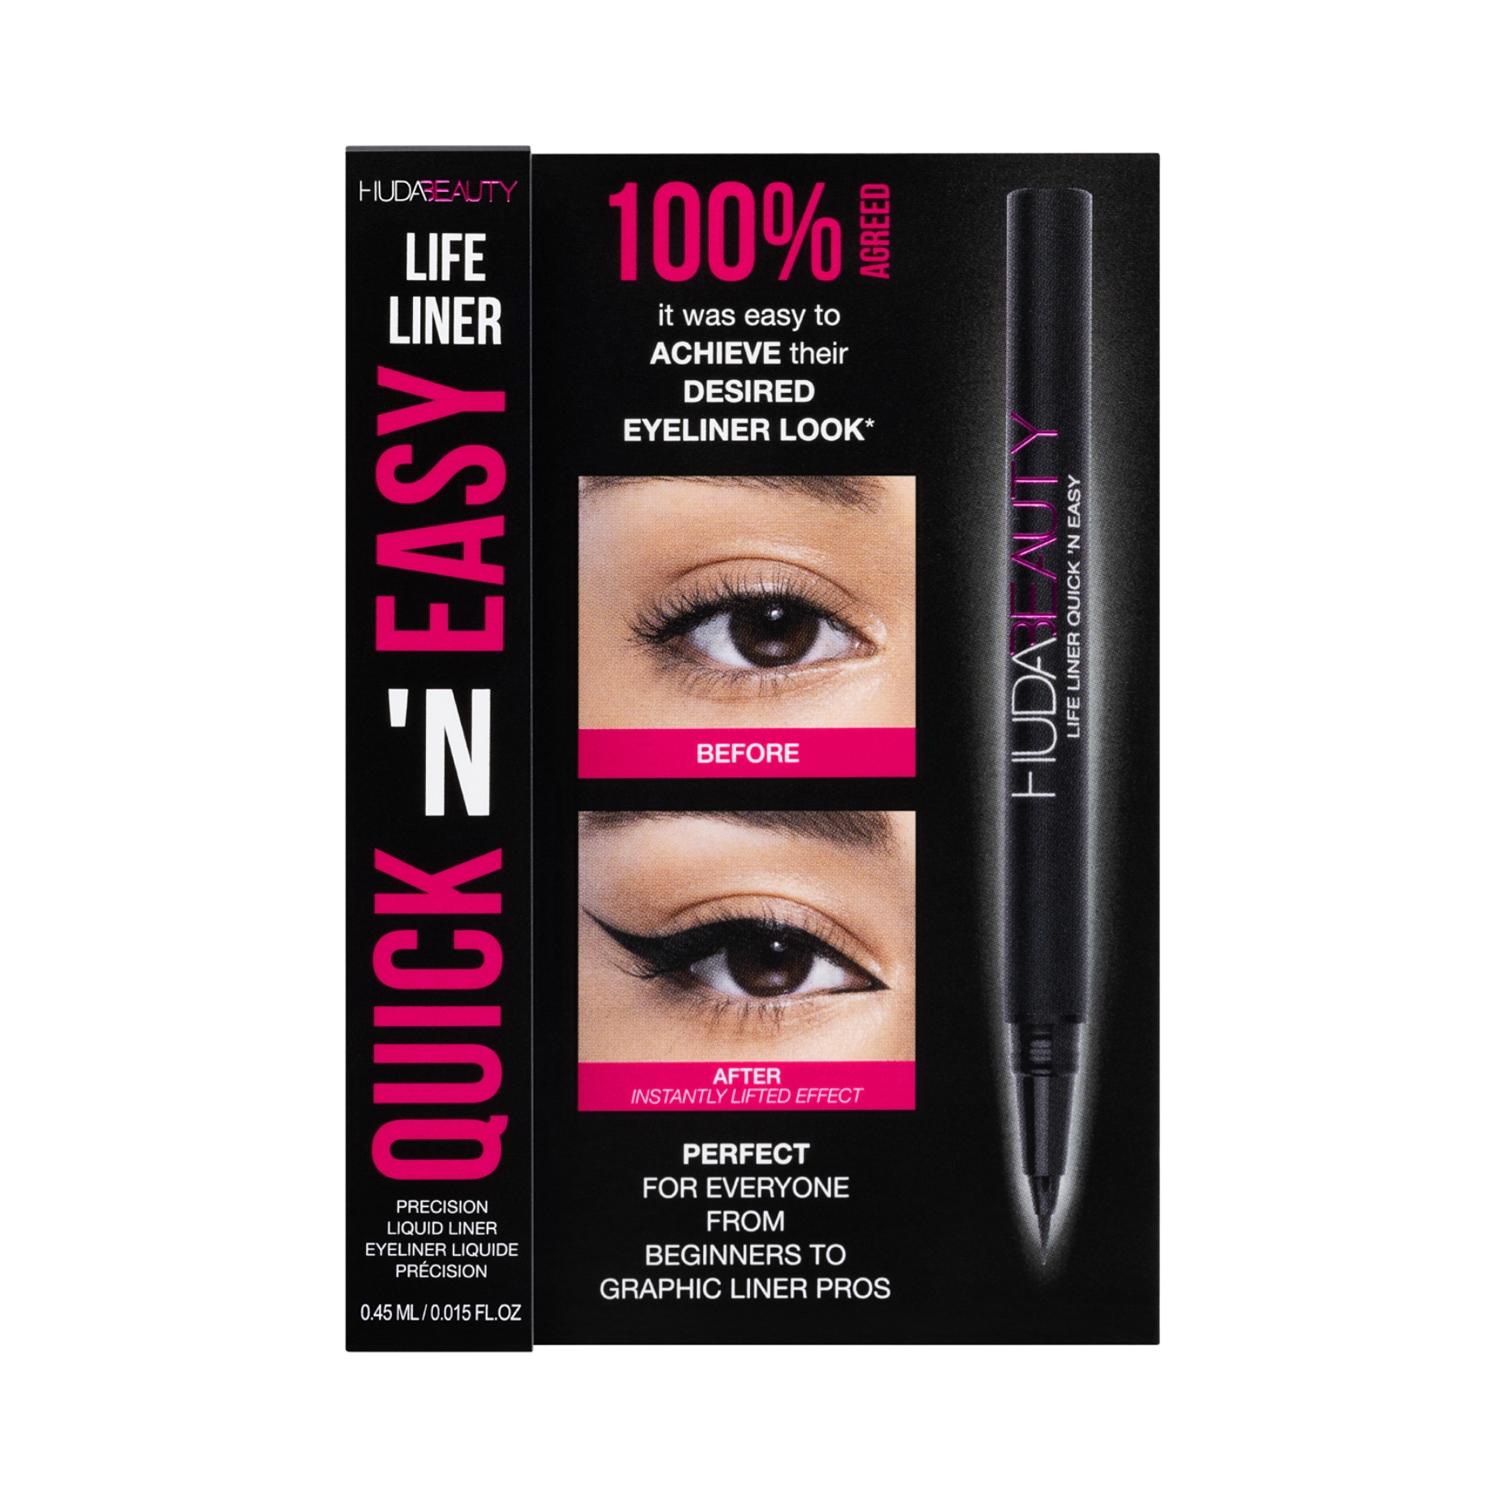 huda beauty life eyeliner quick 'n easy precision liquid eye eyeliner mini - very vanta (0.45ml)